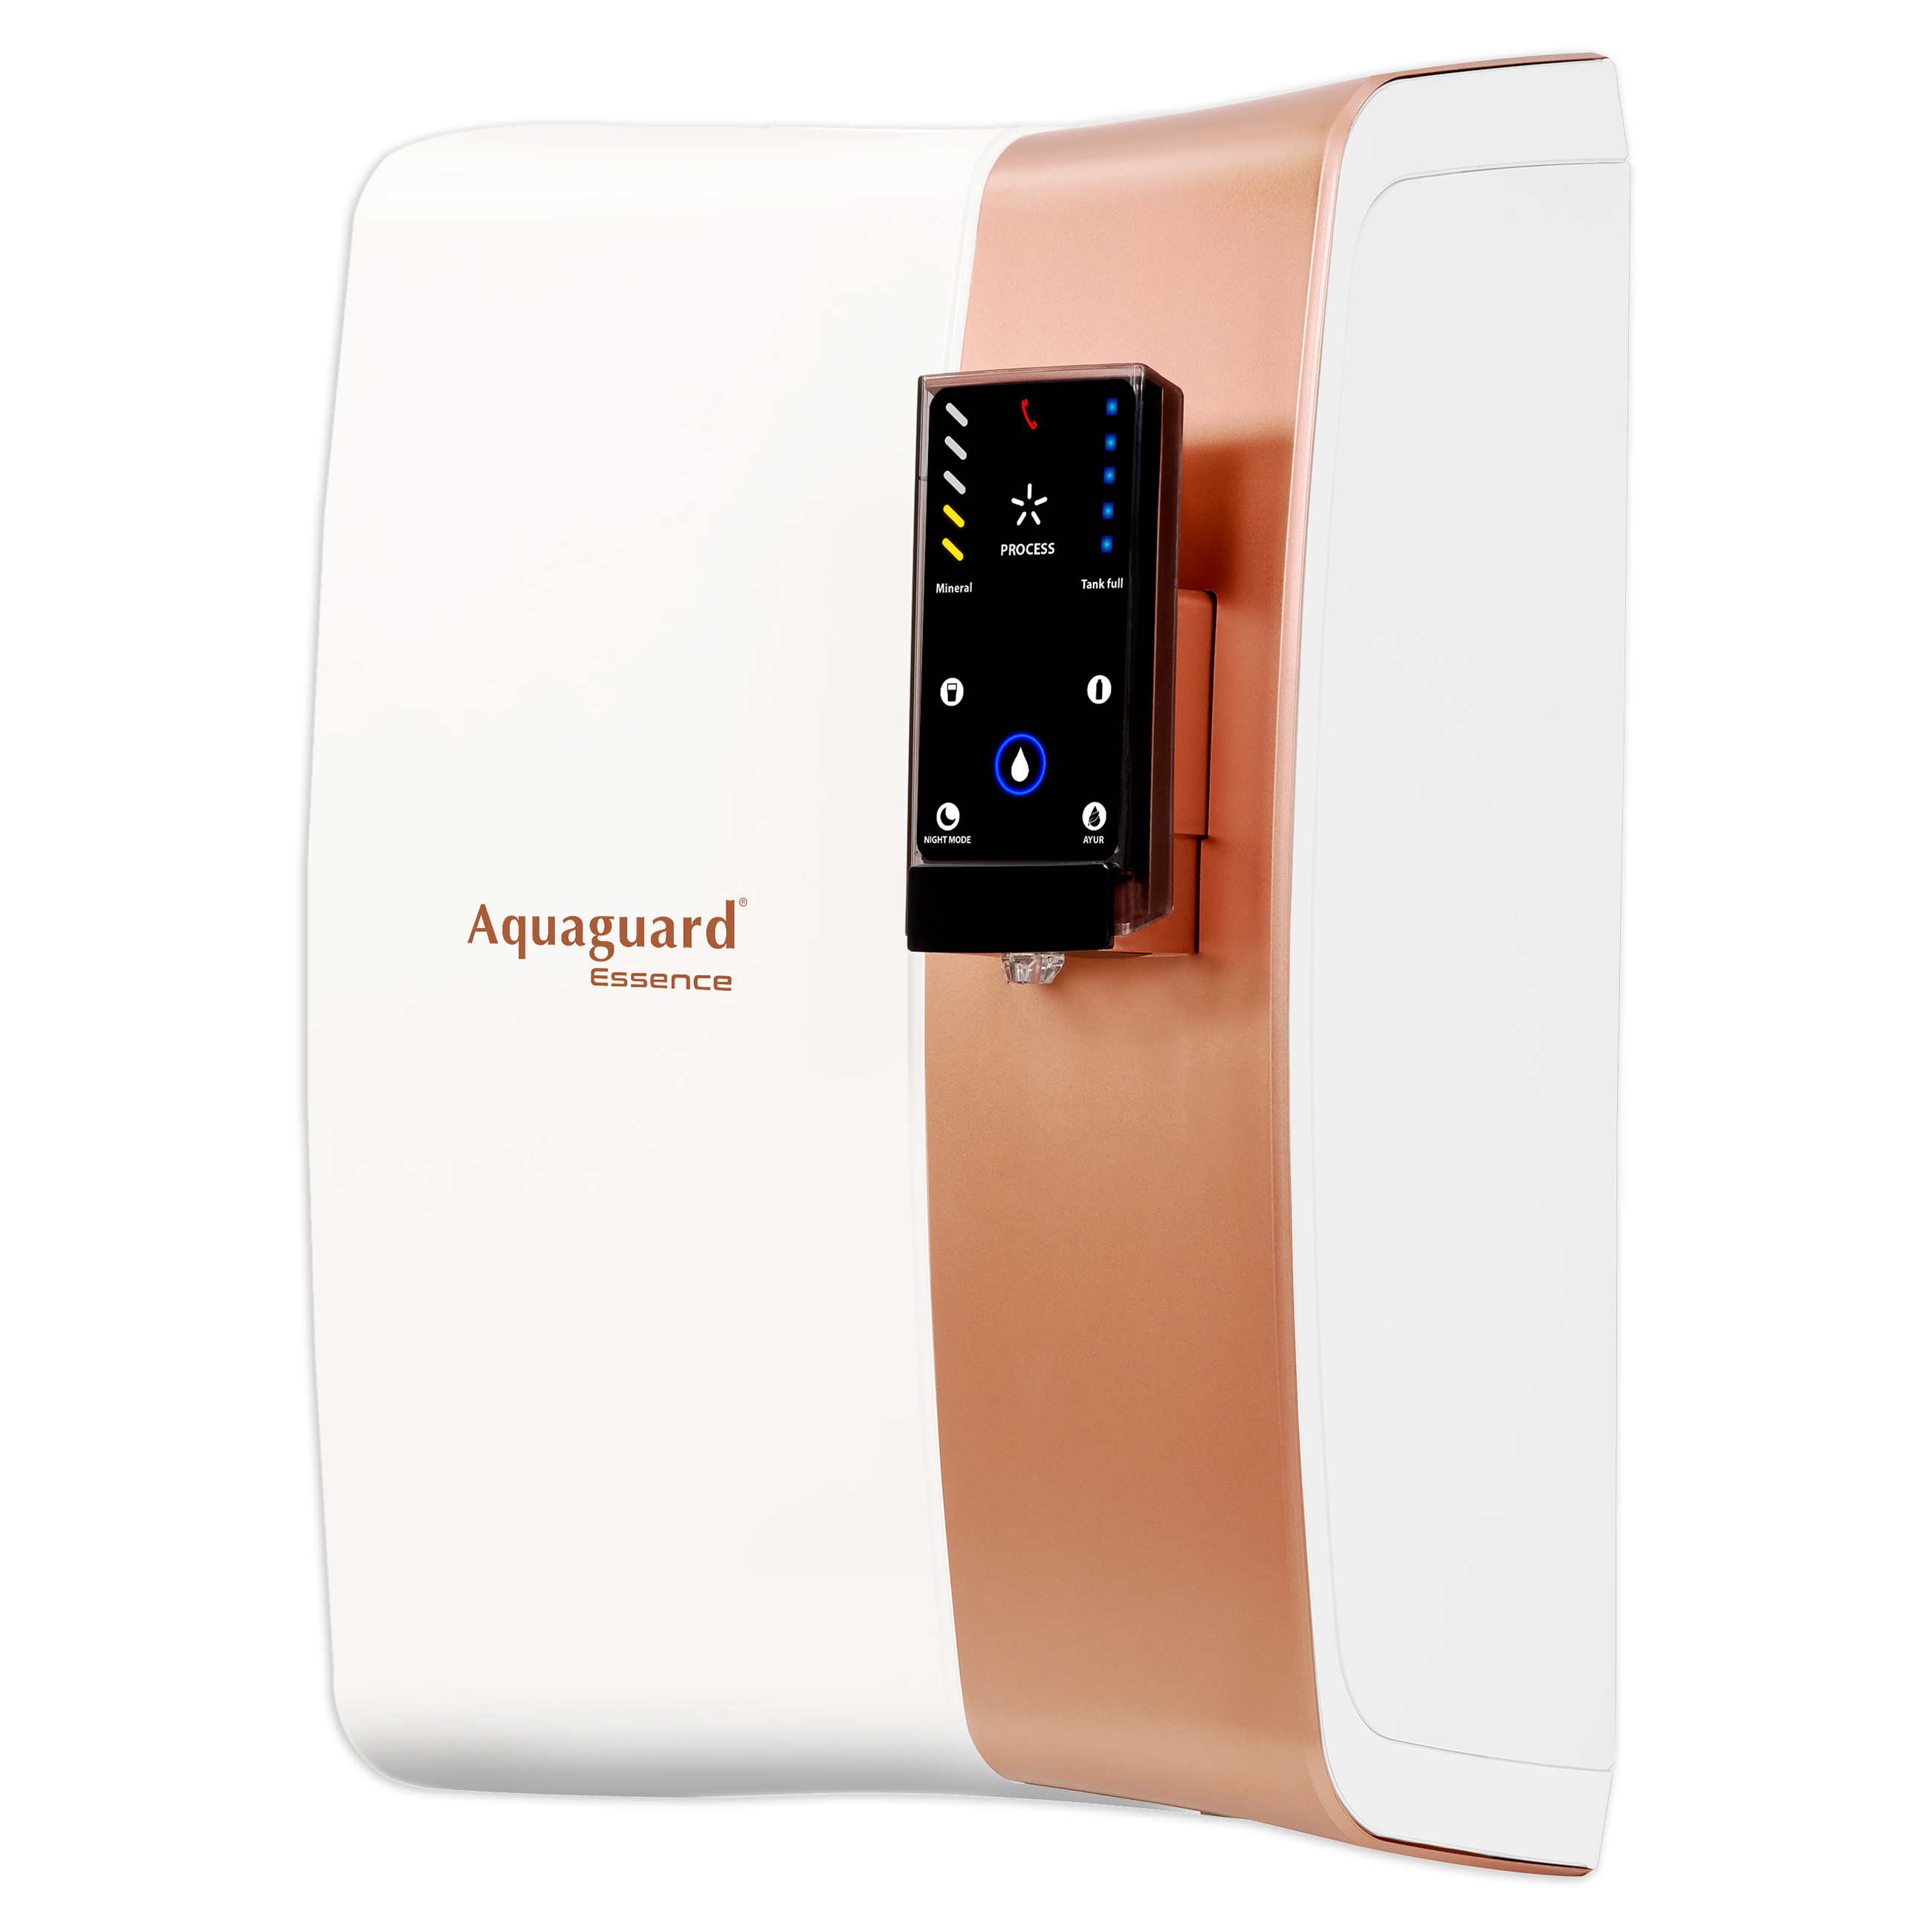 aquaguard - aquaguard Essence RO + UV Electrical Water Purifier (Mineral Content Sensor, GWPDAGESE00000, Pearl White/Metallic Copper)